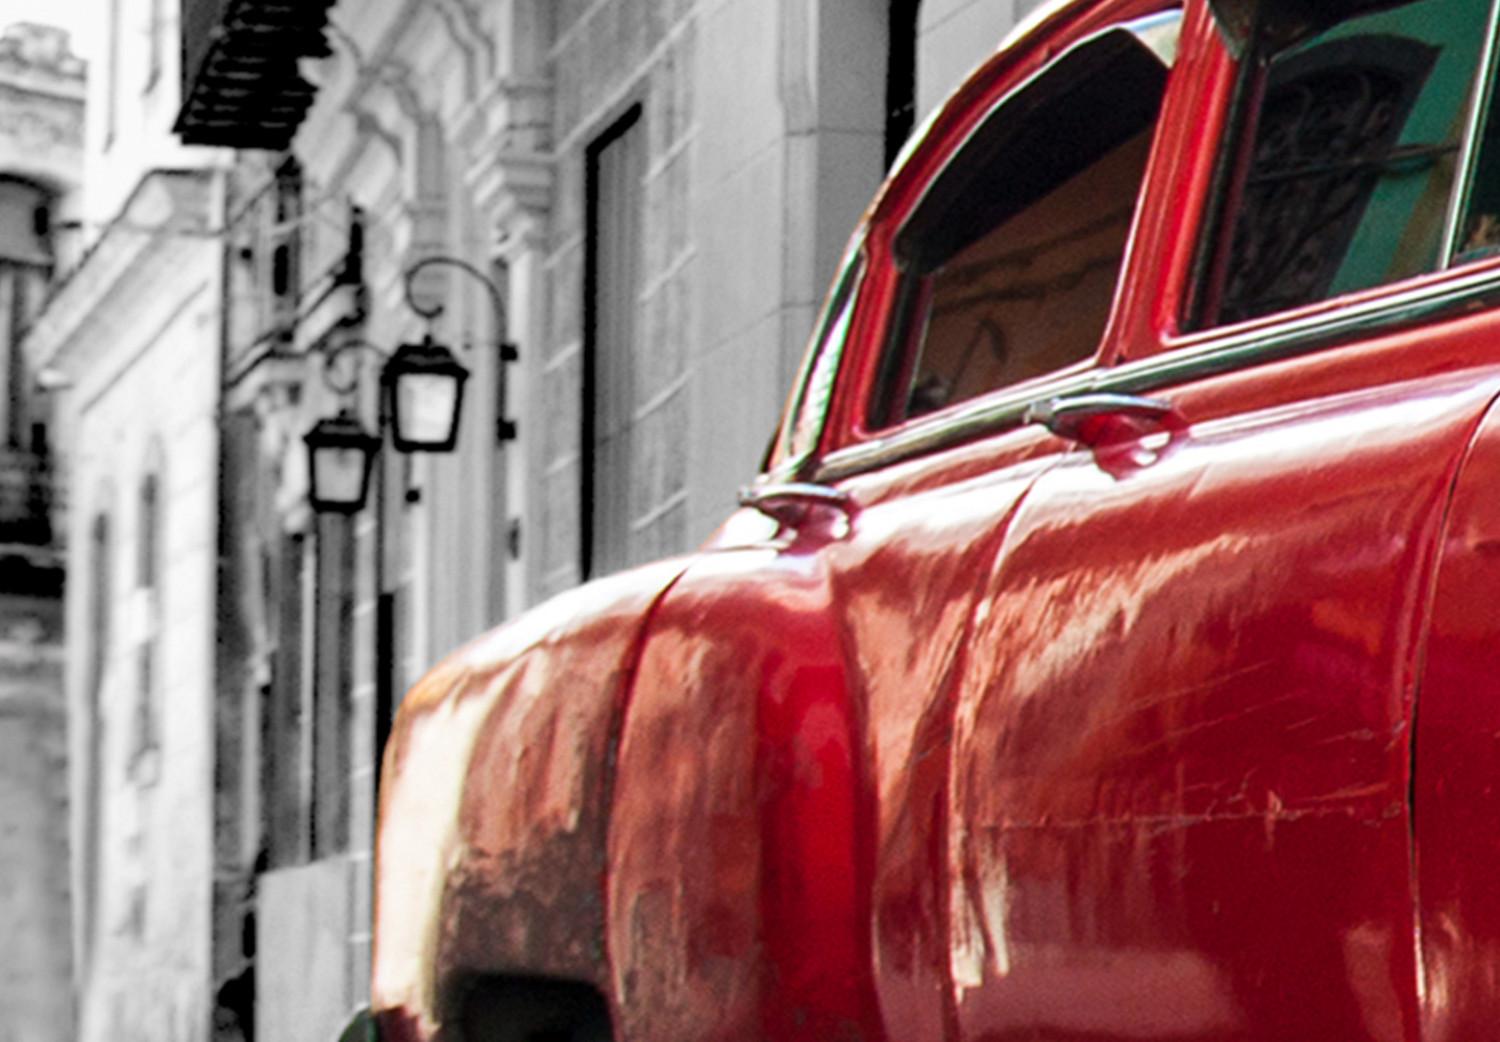 Cuadro XXL Cuban Classic Car (Red) II [Large Format]